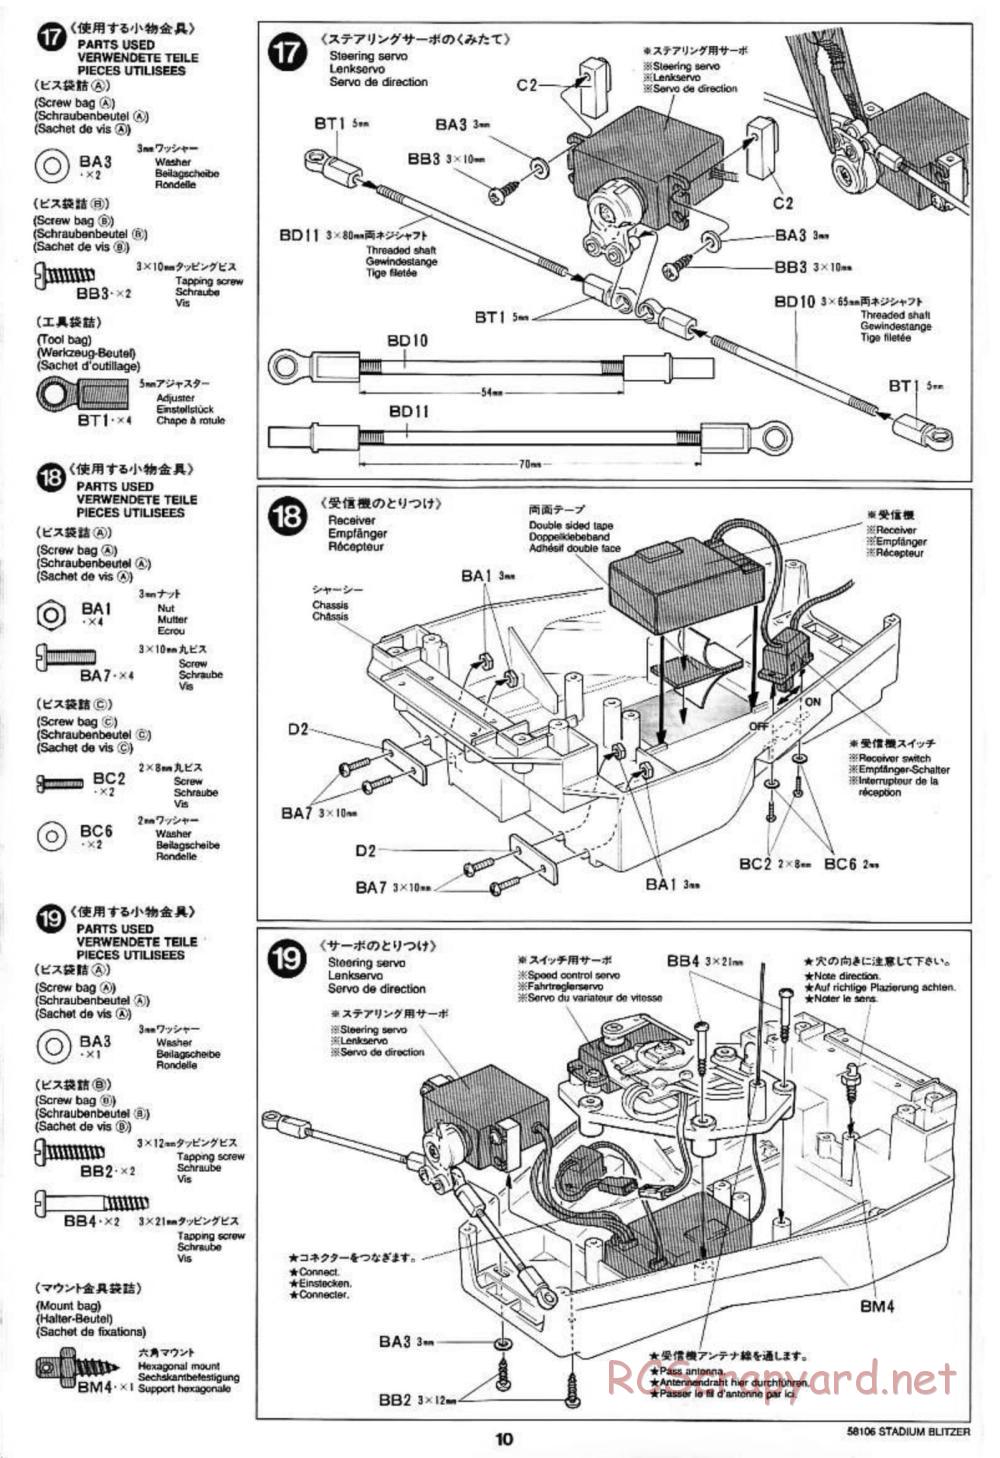 Tamiya - Stadium Blitzer Chassis - Manual - Page 10